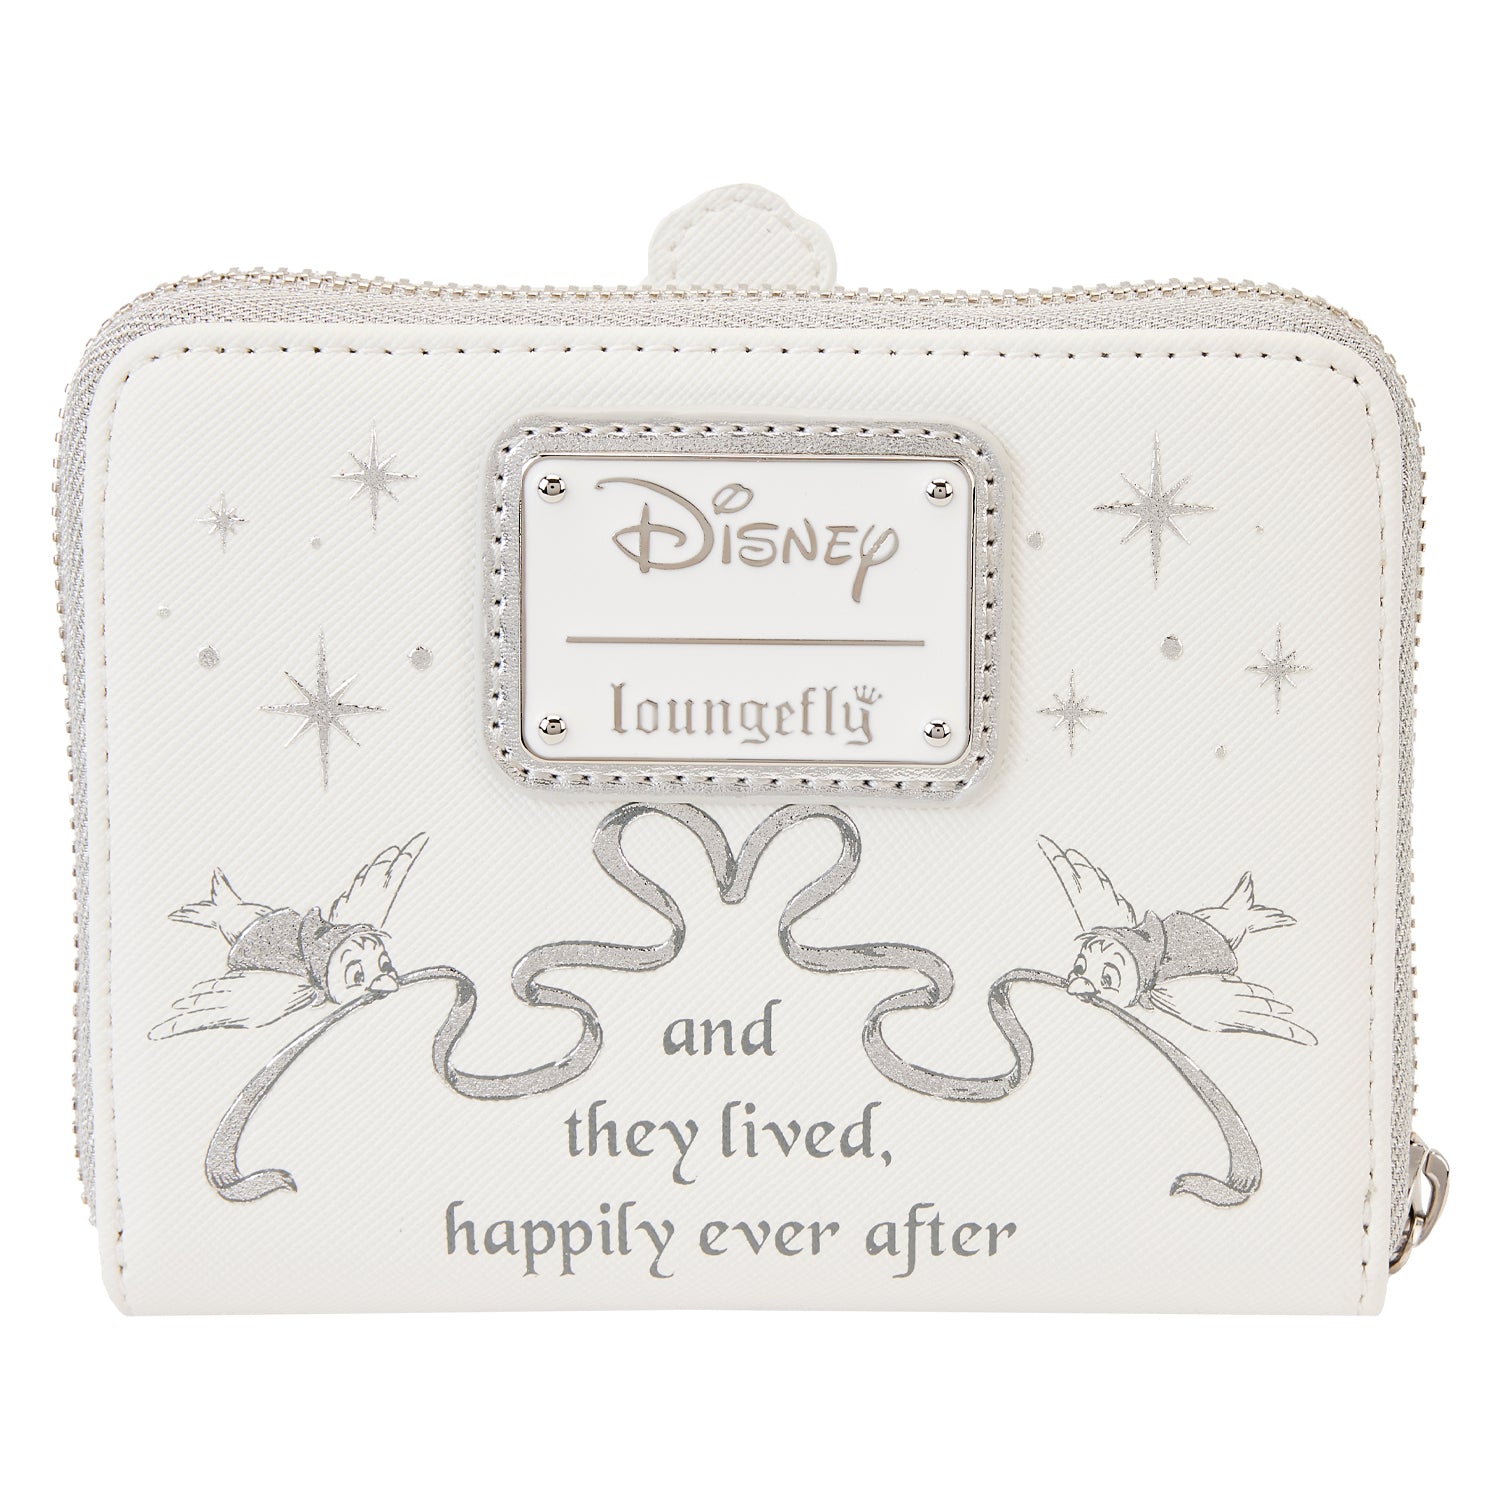 Loungefly Disney Cinderella Happily Ever After Zip Wallet